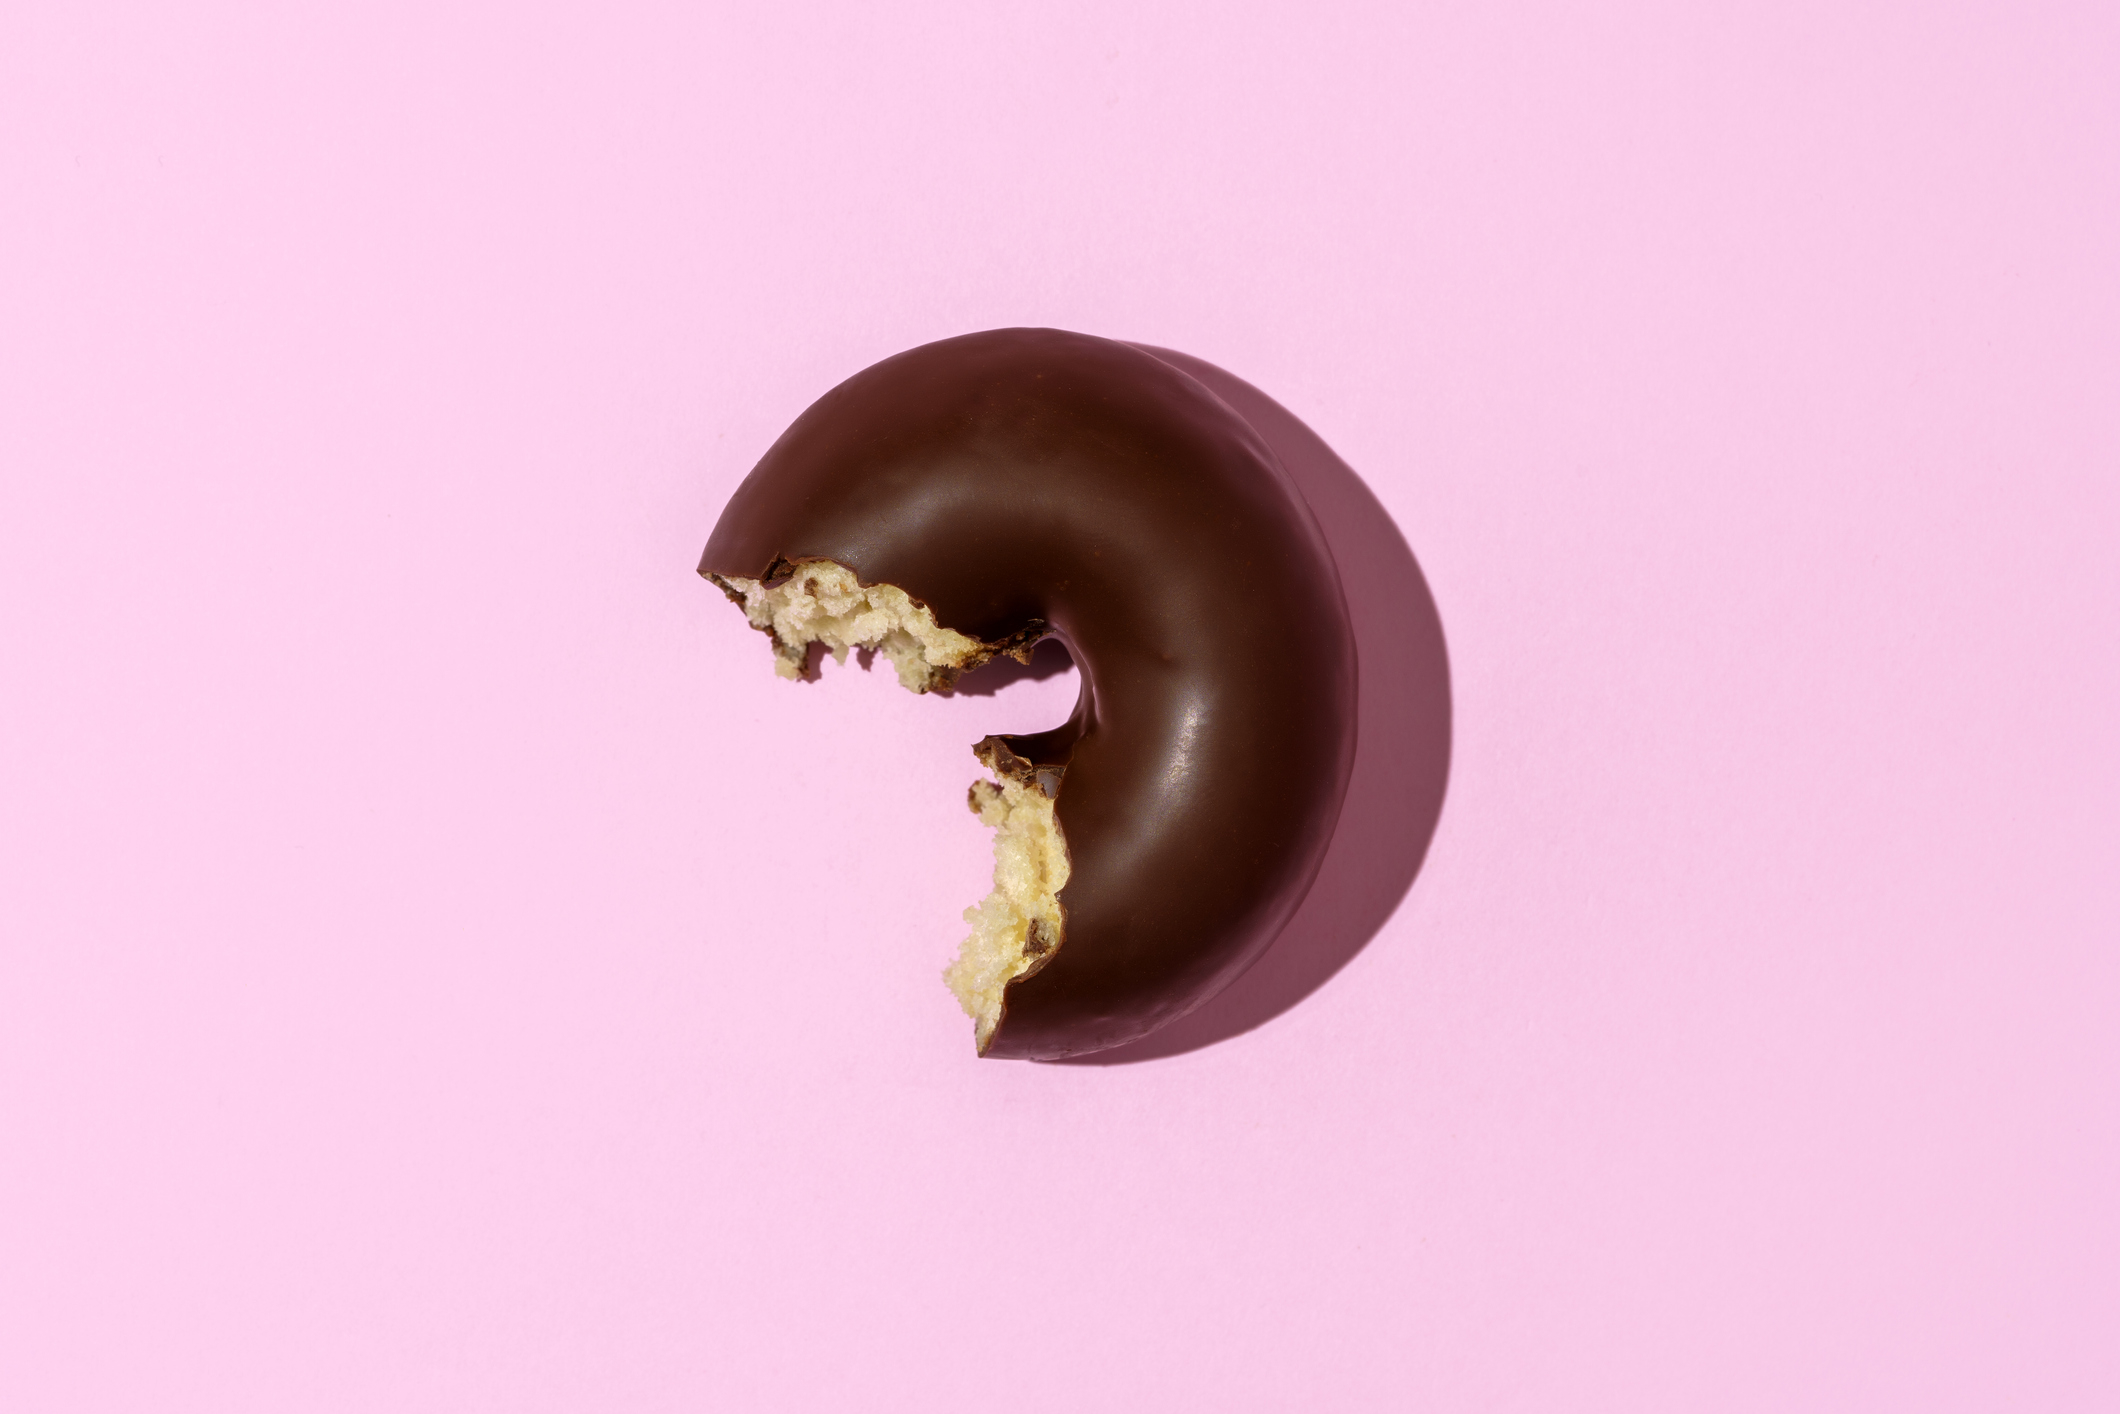 A half-eaten chocolate donut